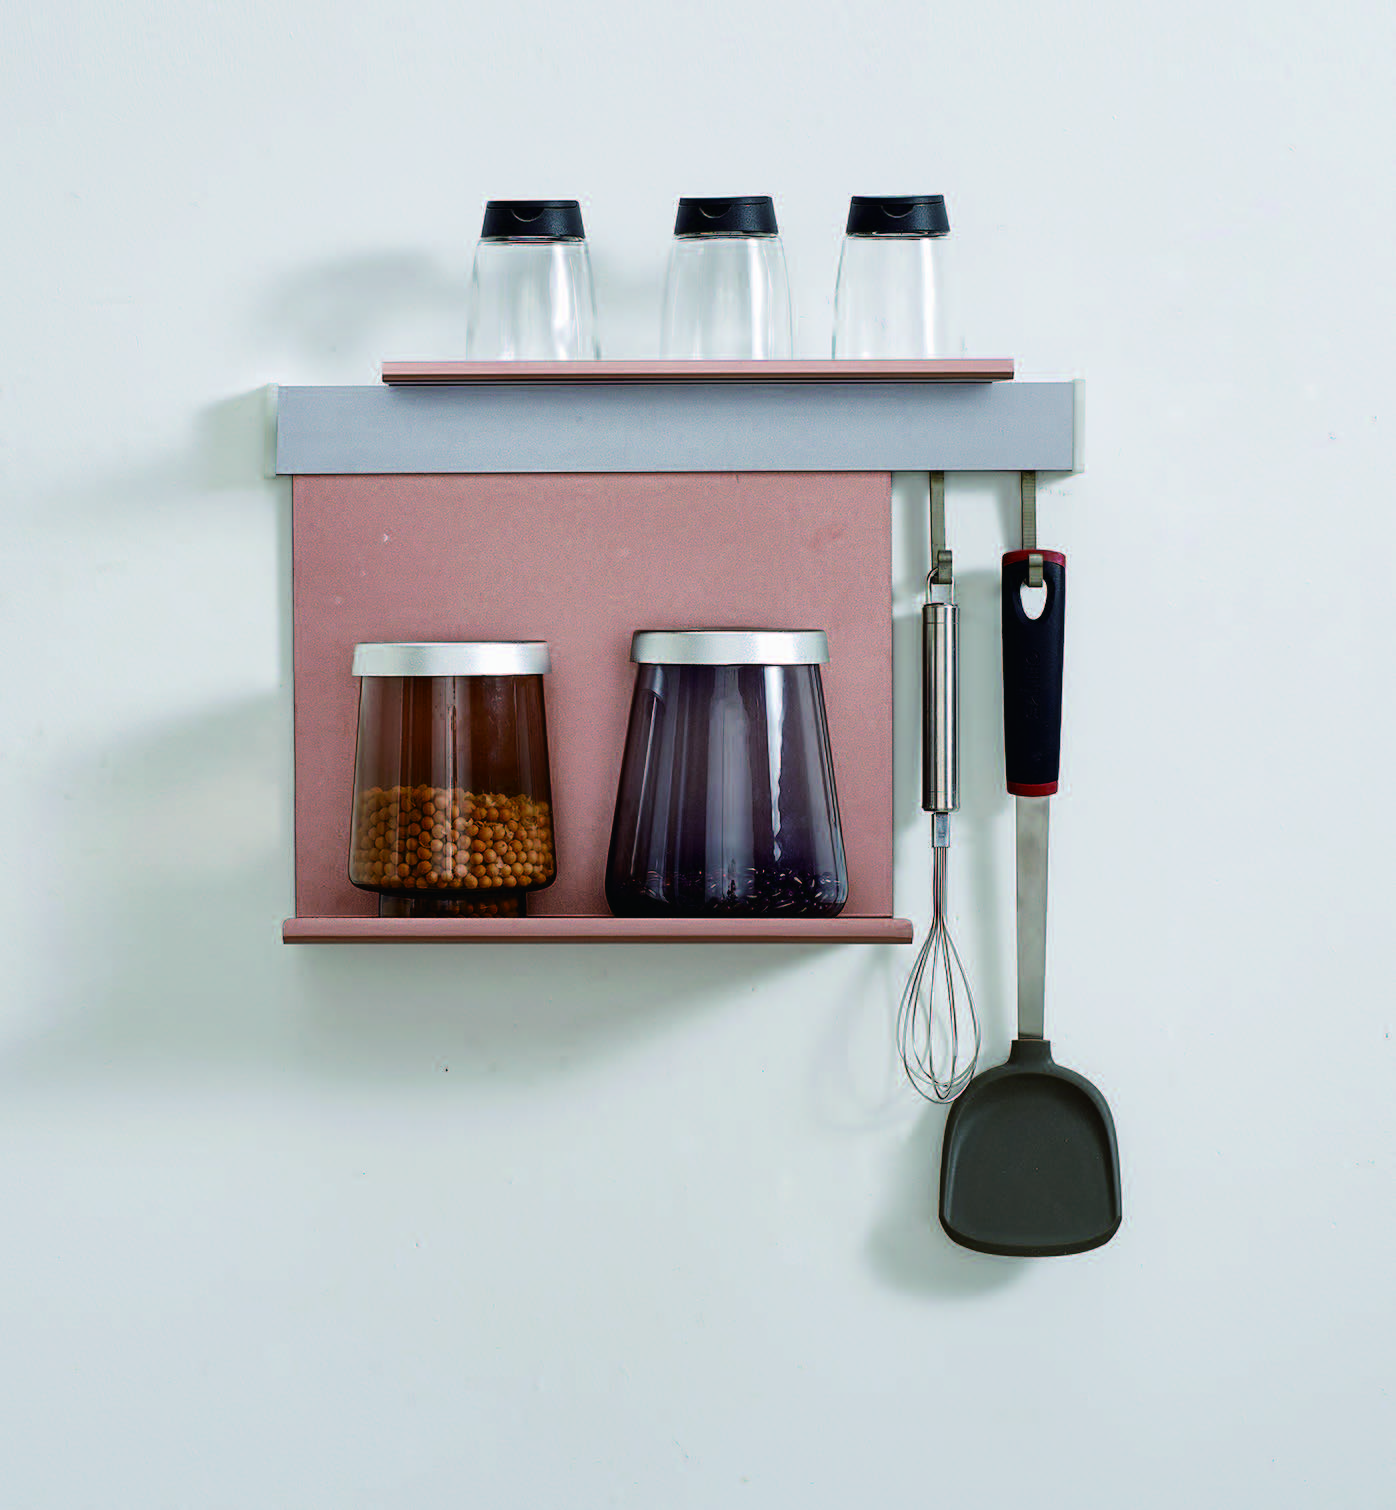 Special Design Wall Mount Multifunction Kitchen Shelf Organizer with Hooks